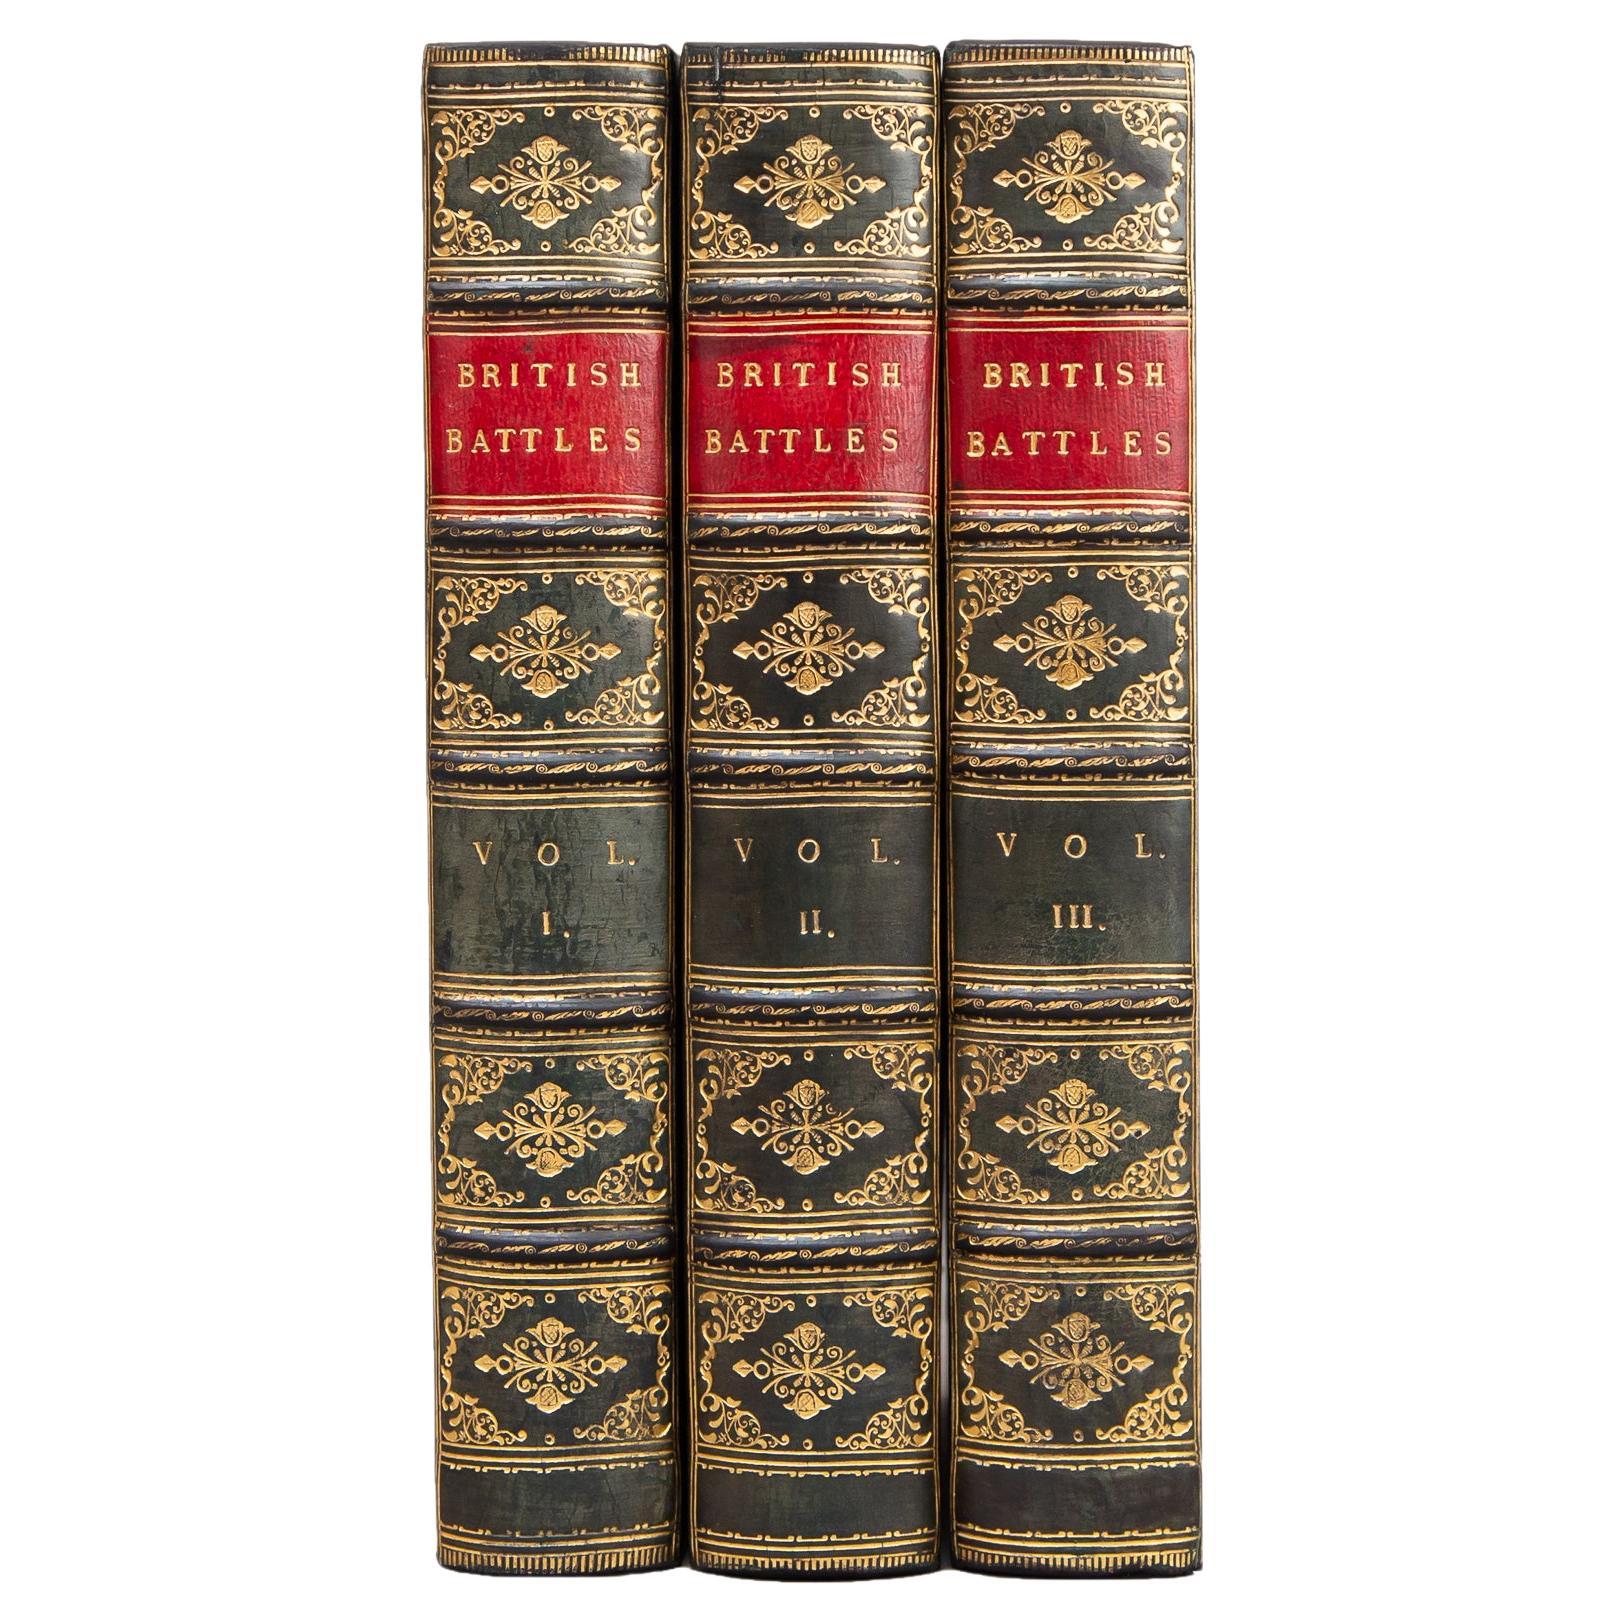 3 Volumes, James Grant, British Battles For Sale